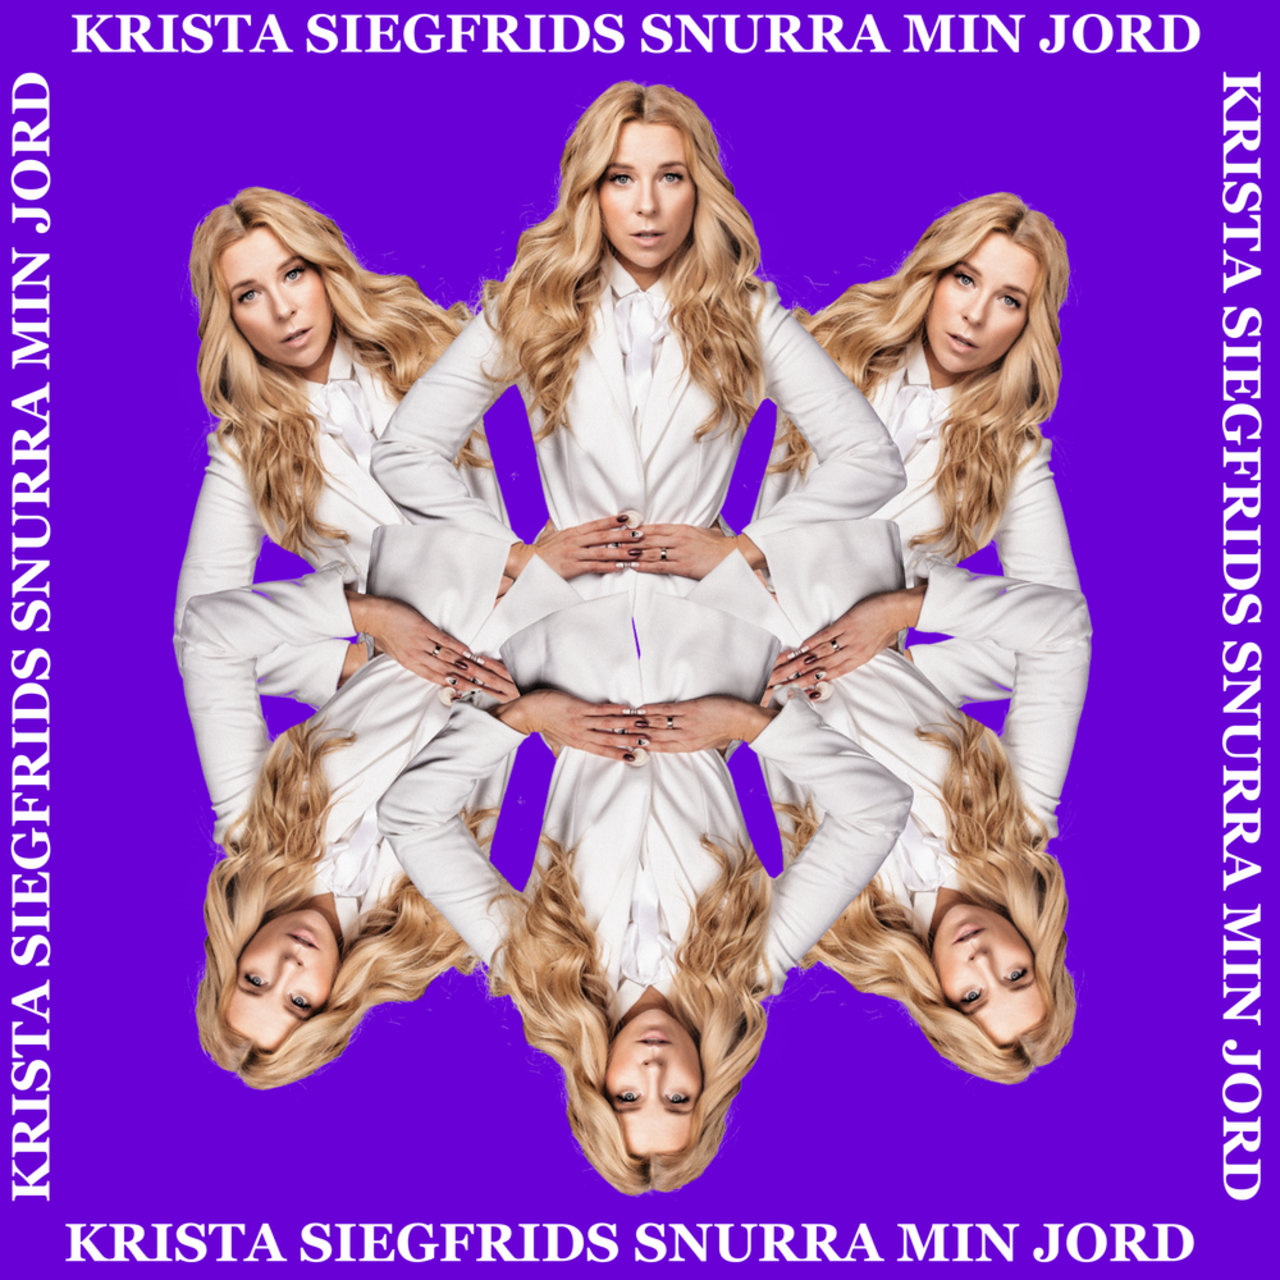 Krista Siegfrids — Snurra min jord cover artwork